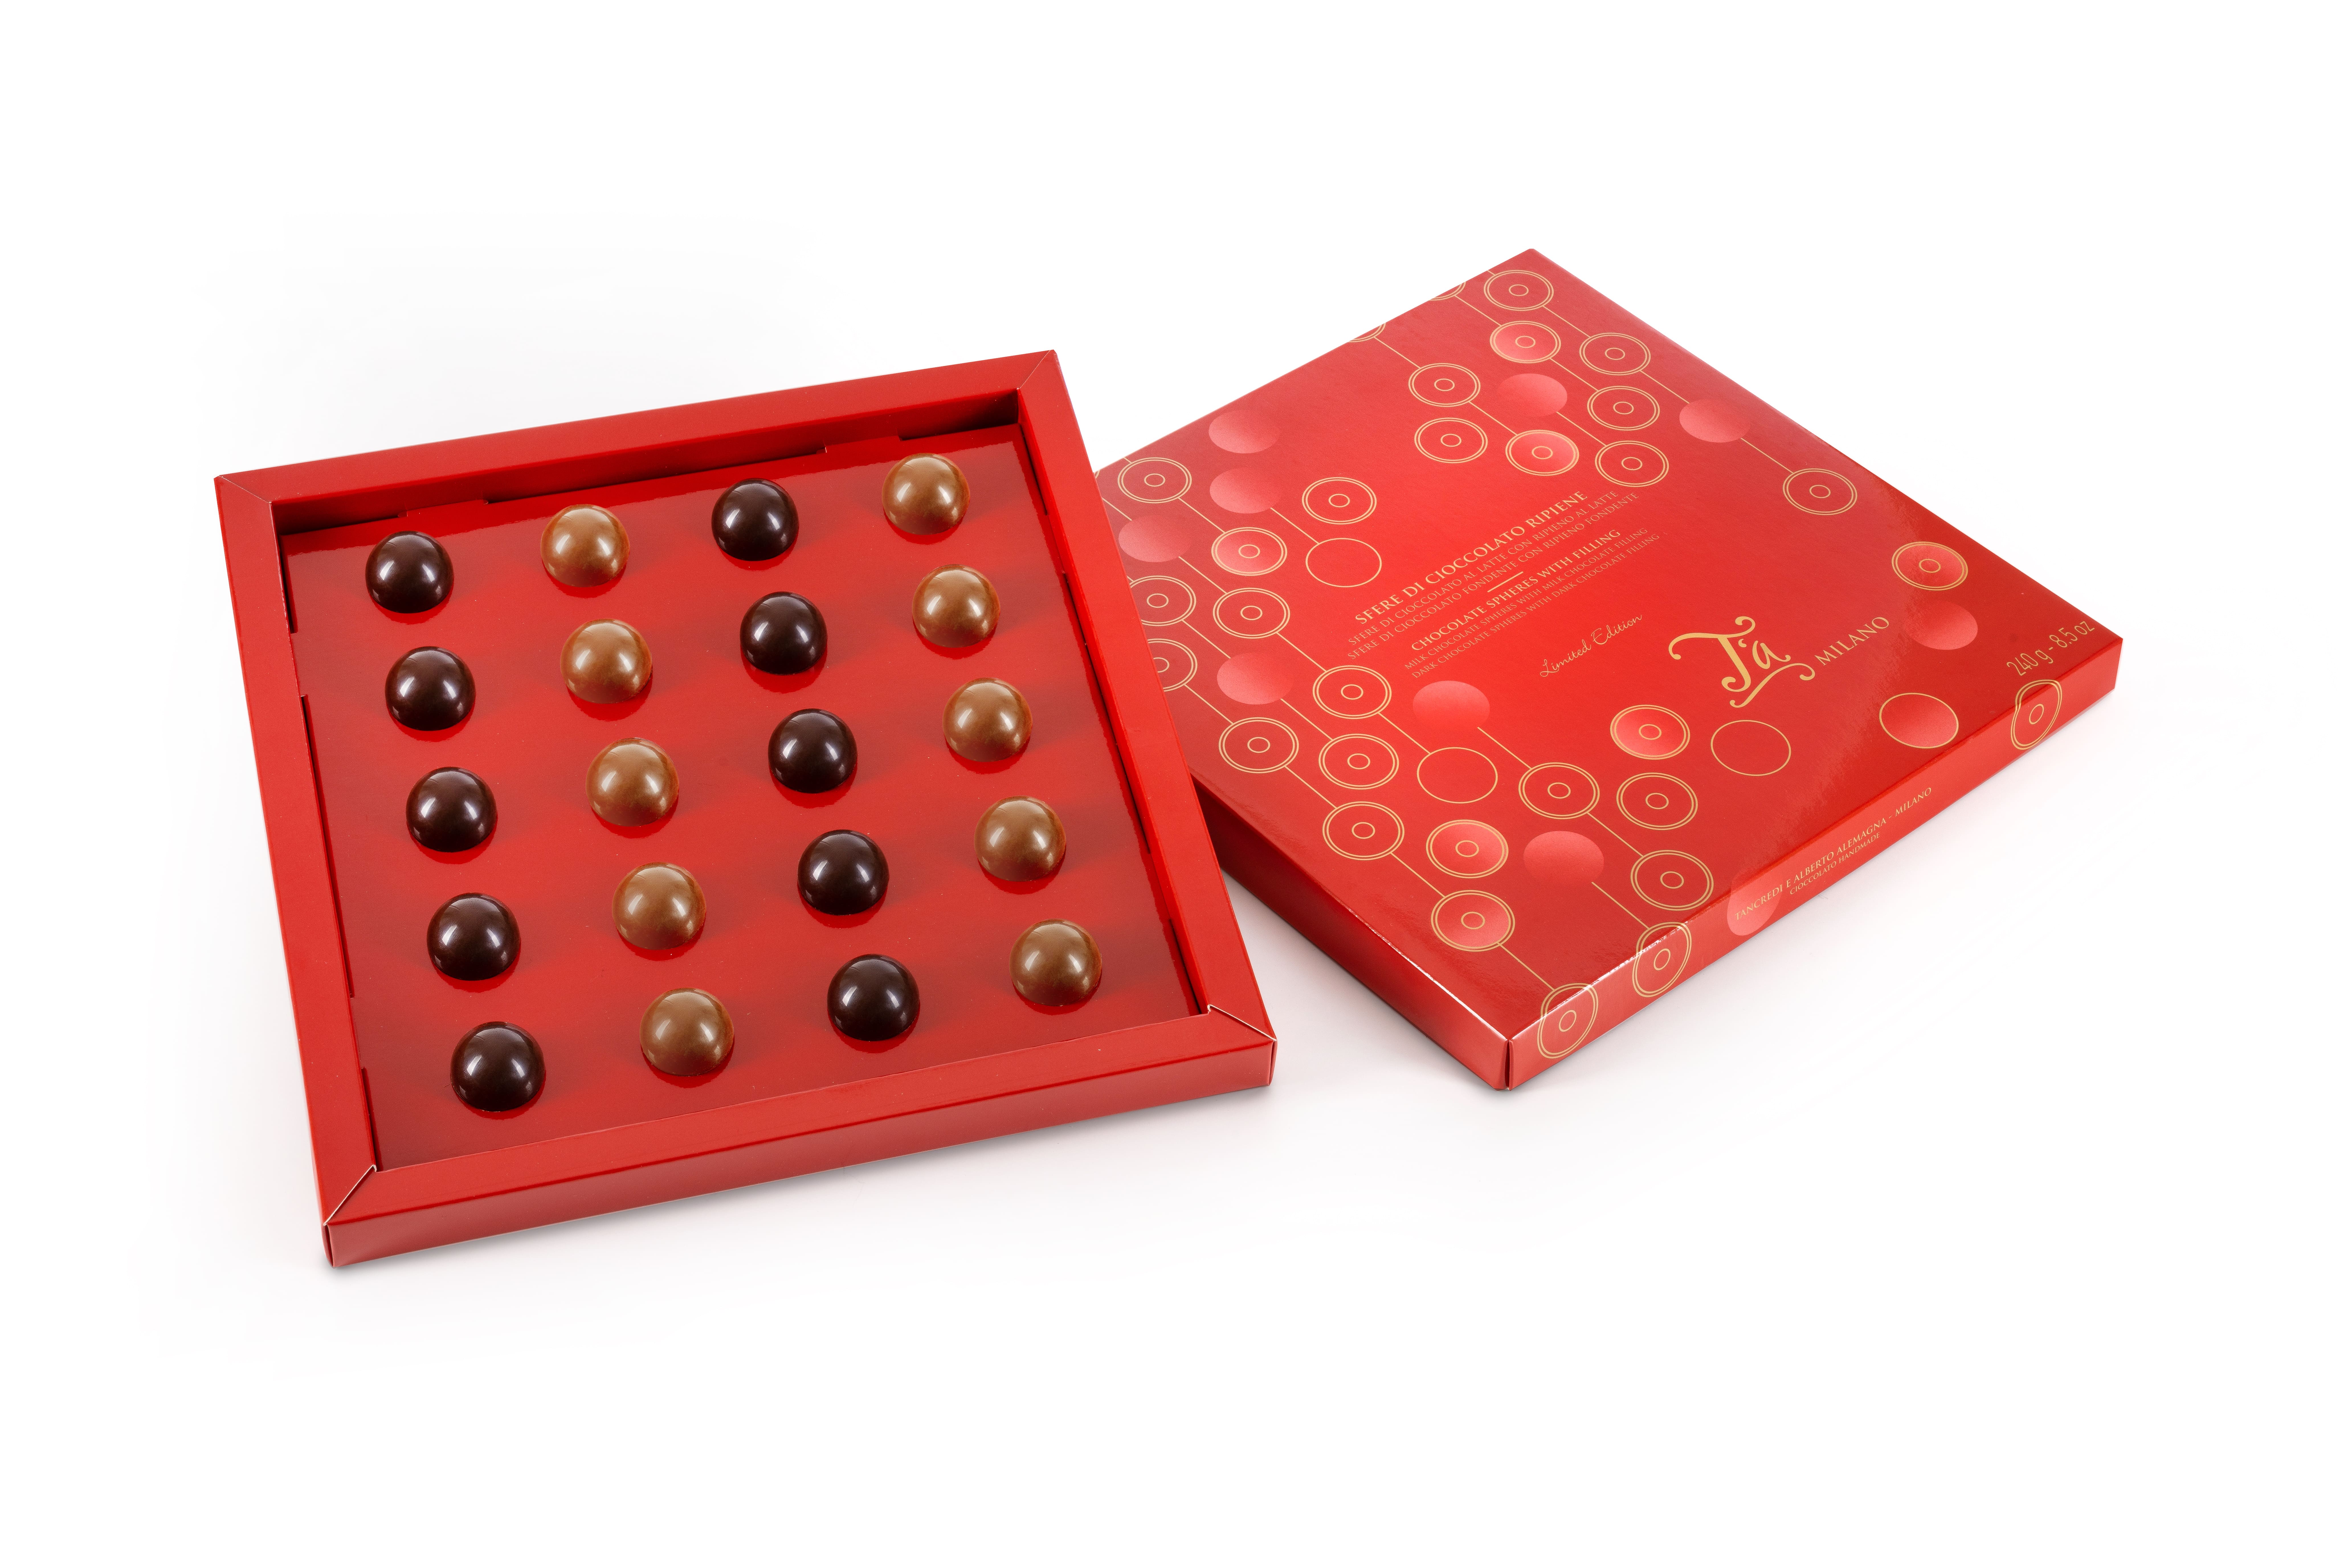 Ciocosfere - Red Limited Edition Set, 240 g 